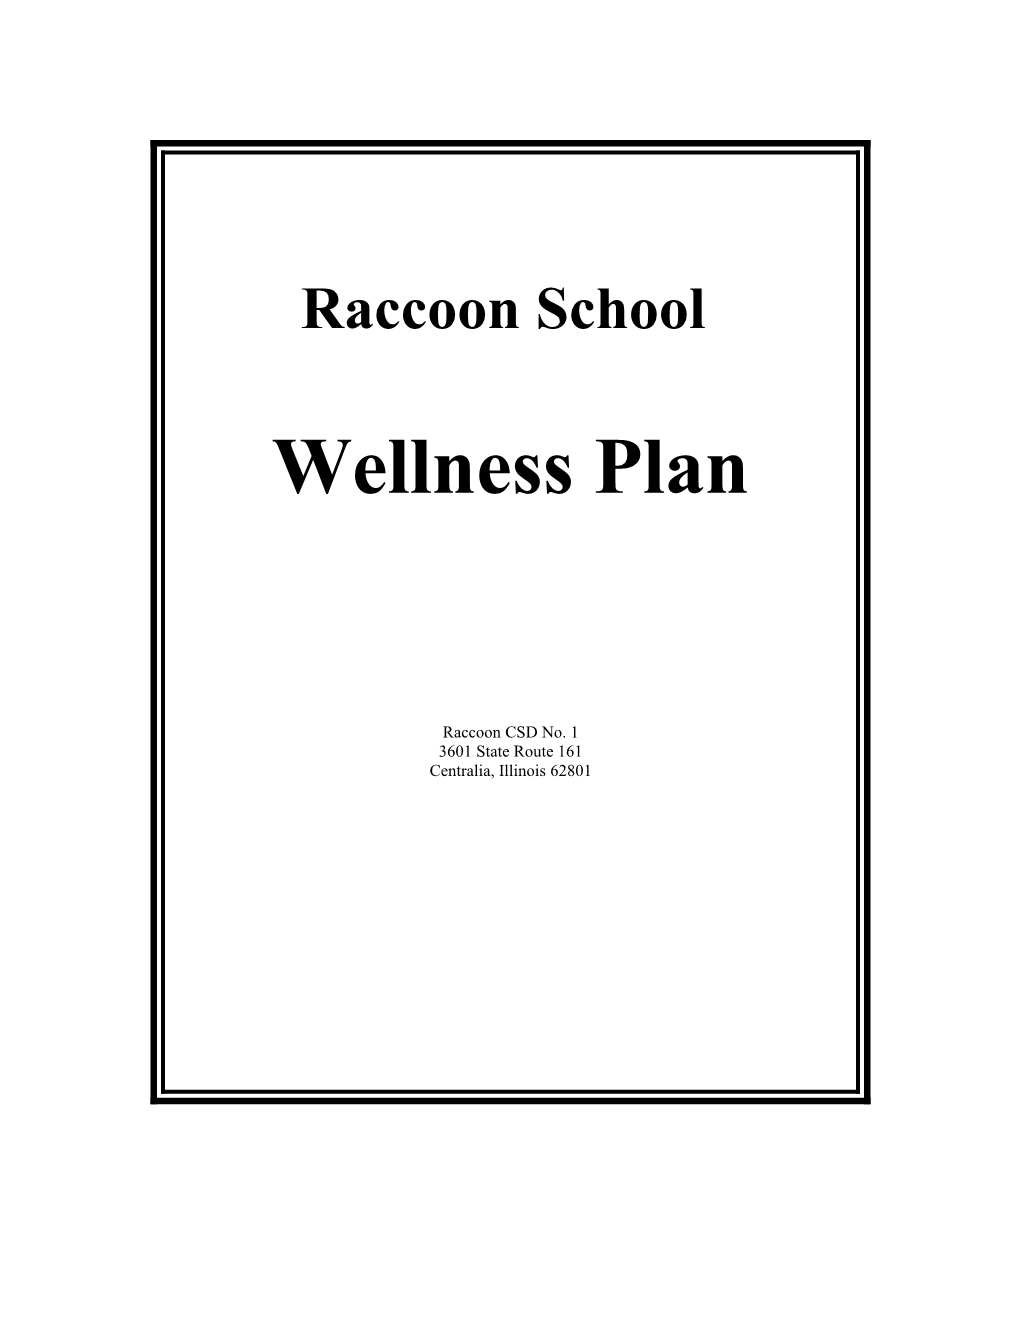 School Wellness Plan